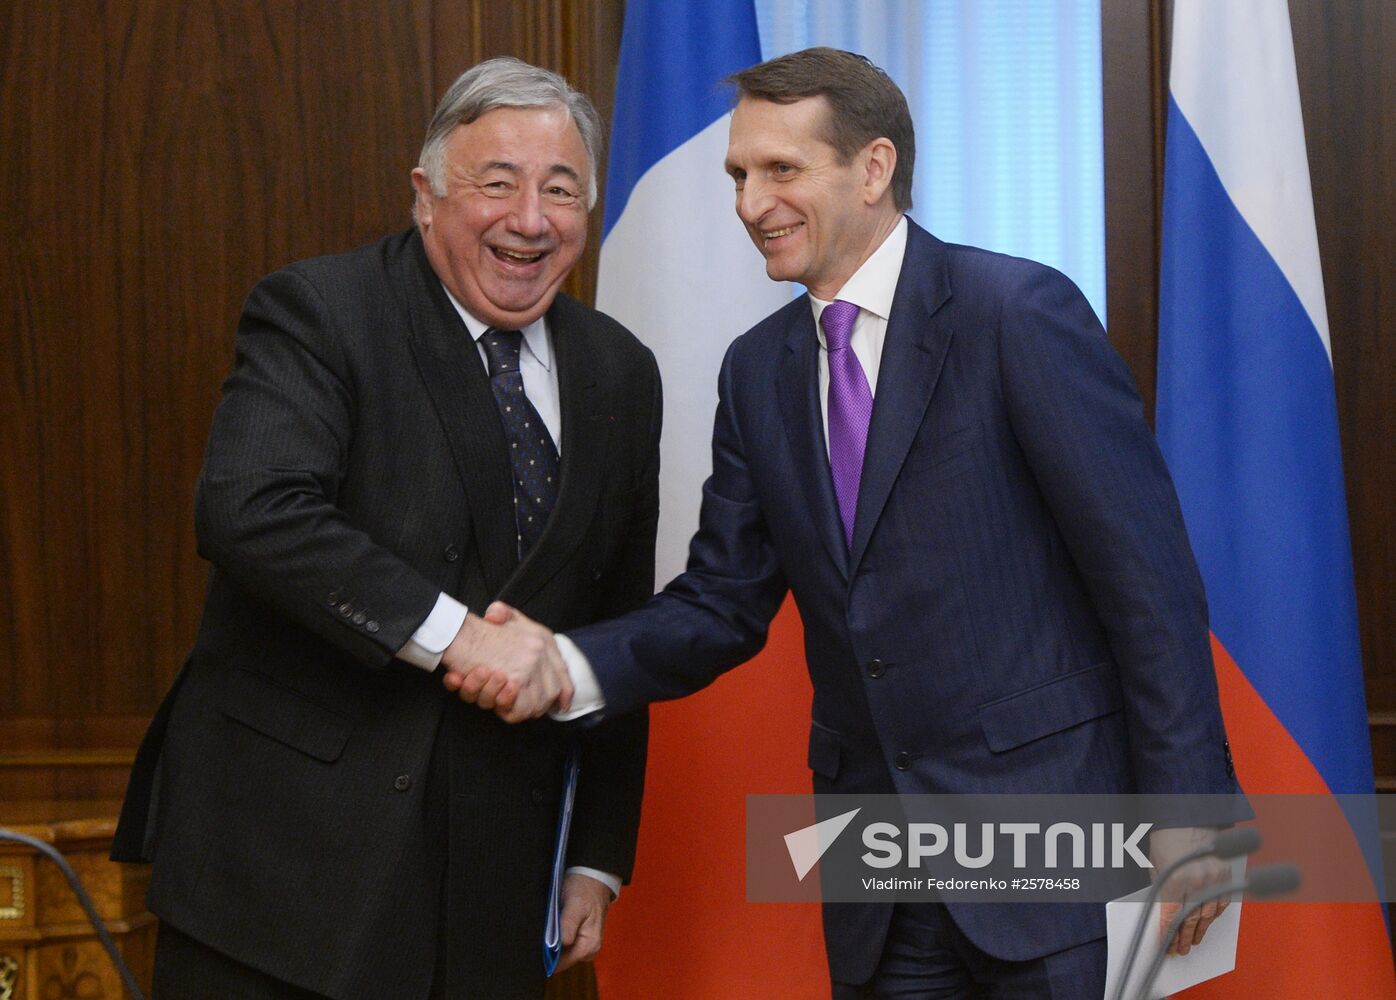 State Duma Speaker Sergei Naryshkin meets with President of the French Senate Gerard Larcher